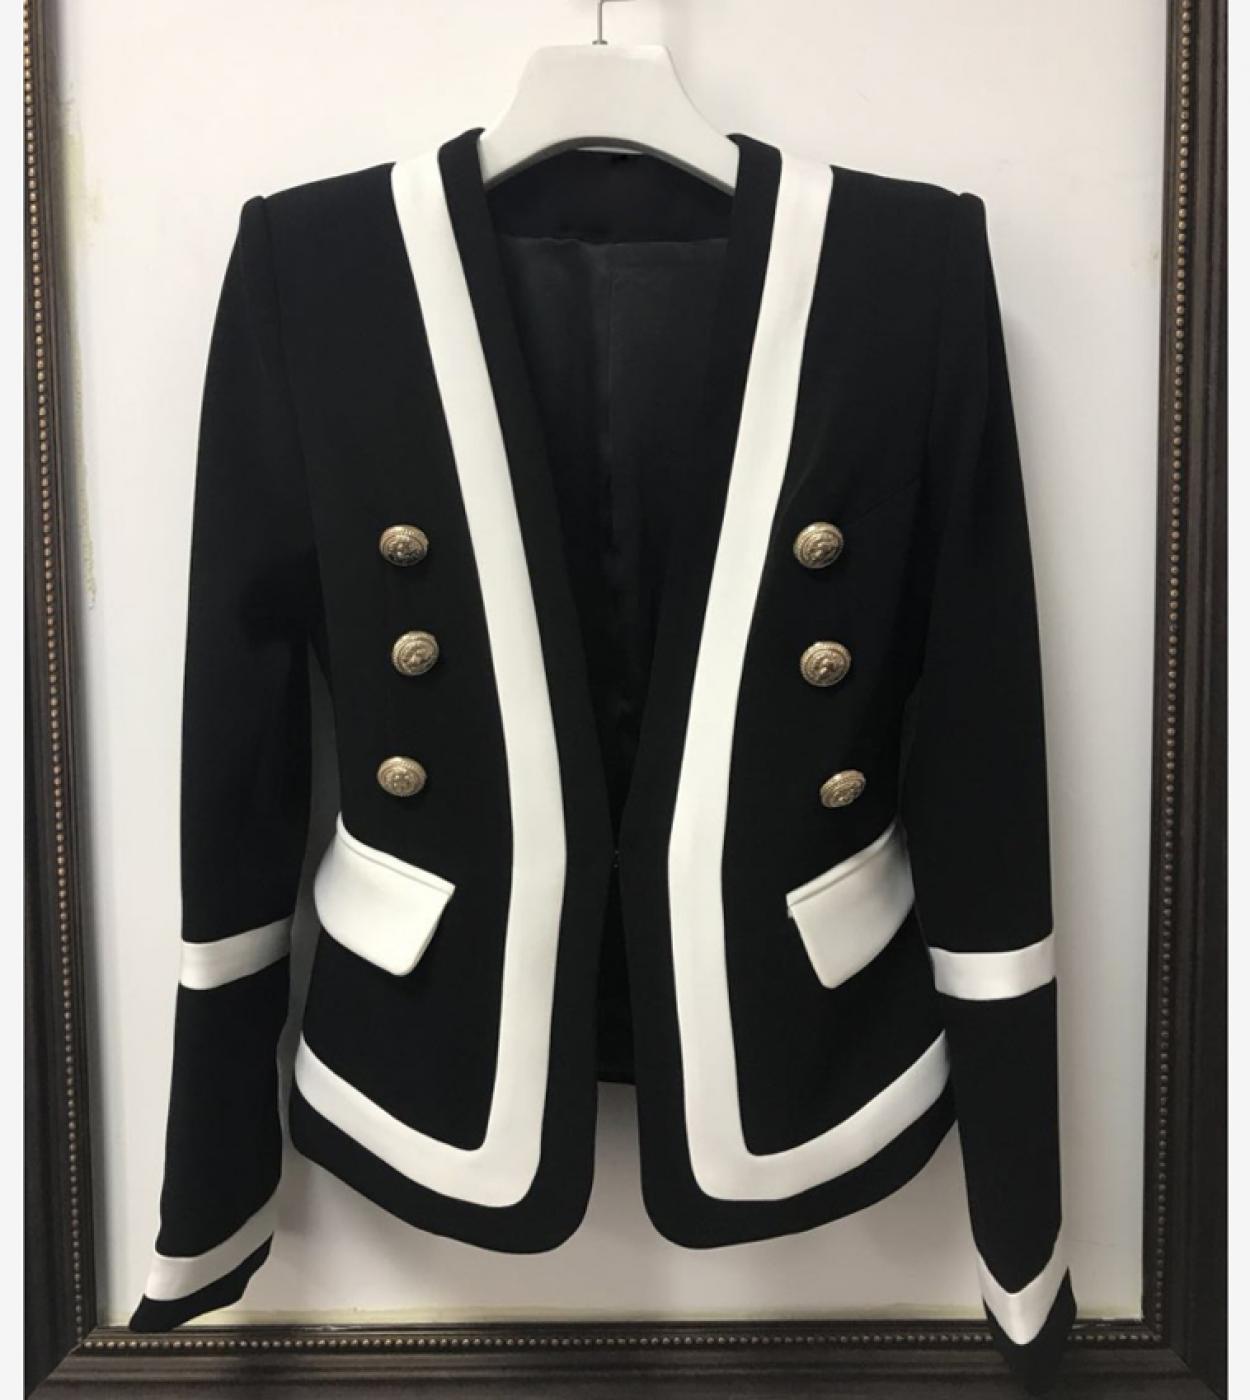 High Quality New Fashion  Designer Blazer Jacket Womens Classic Black White Color Block Metal Buttons Blazer  Blazers